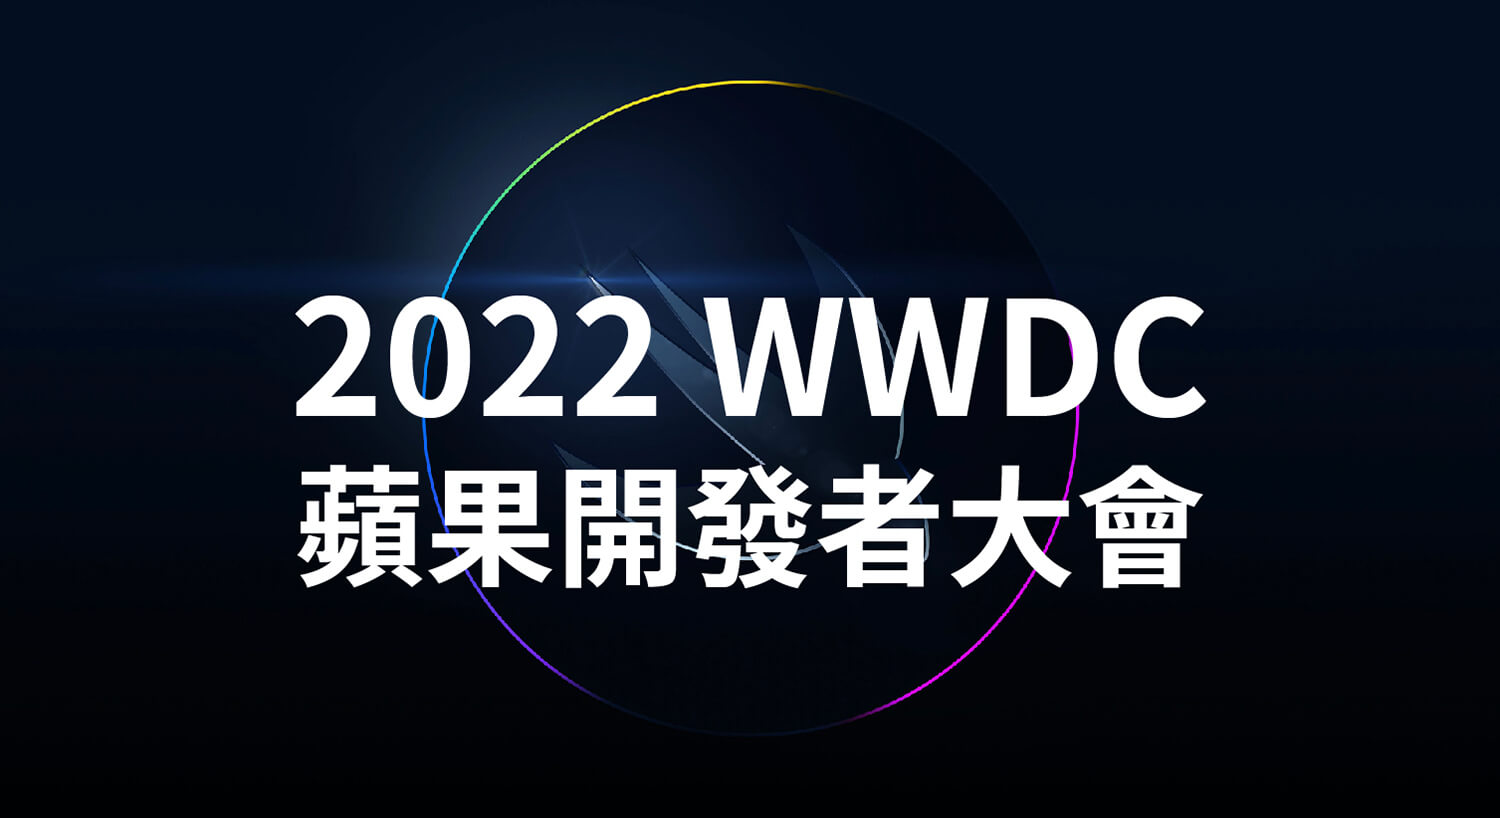 2022 WWDC 蘋果開發者大會將於 6/6 舉行並發布 iOS 16 等系統更新 - 2022 WWDC, iOS 16, iOS16, iPadOS 16, iPadOS16, macOS 13, watchOS 9, WWDC, WWDC 2022 - 塔科女子